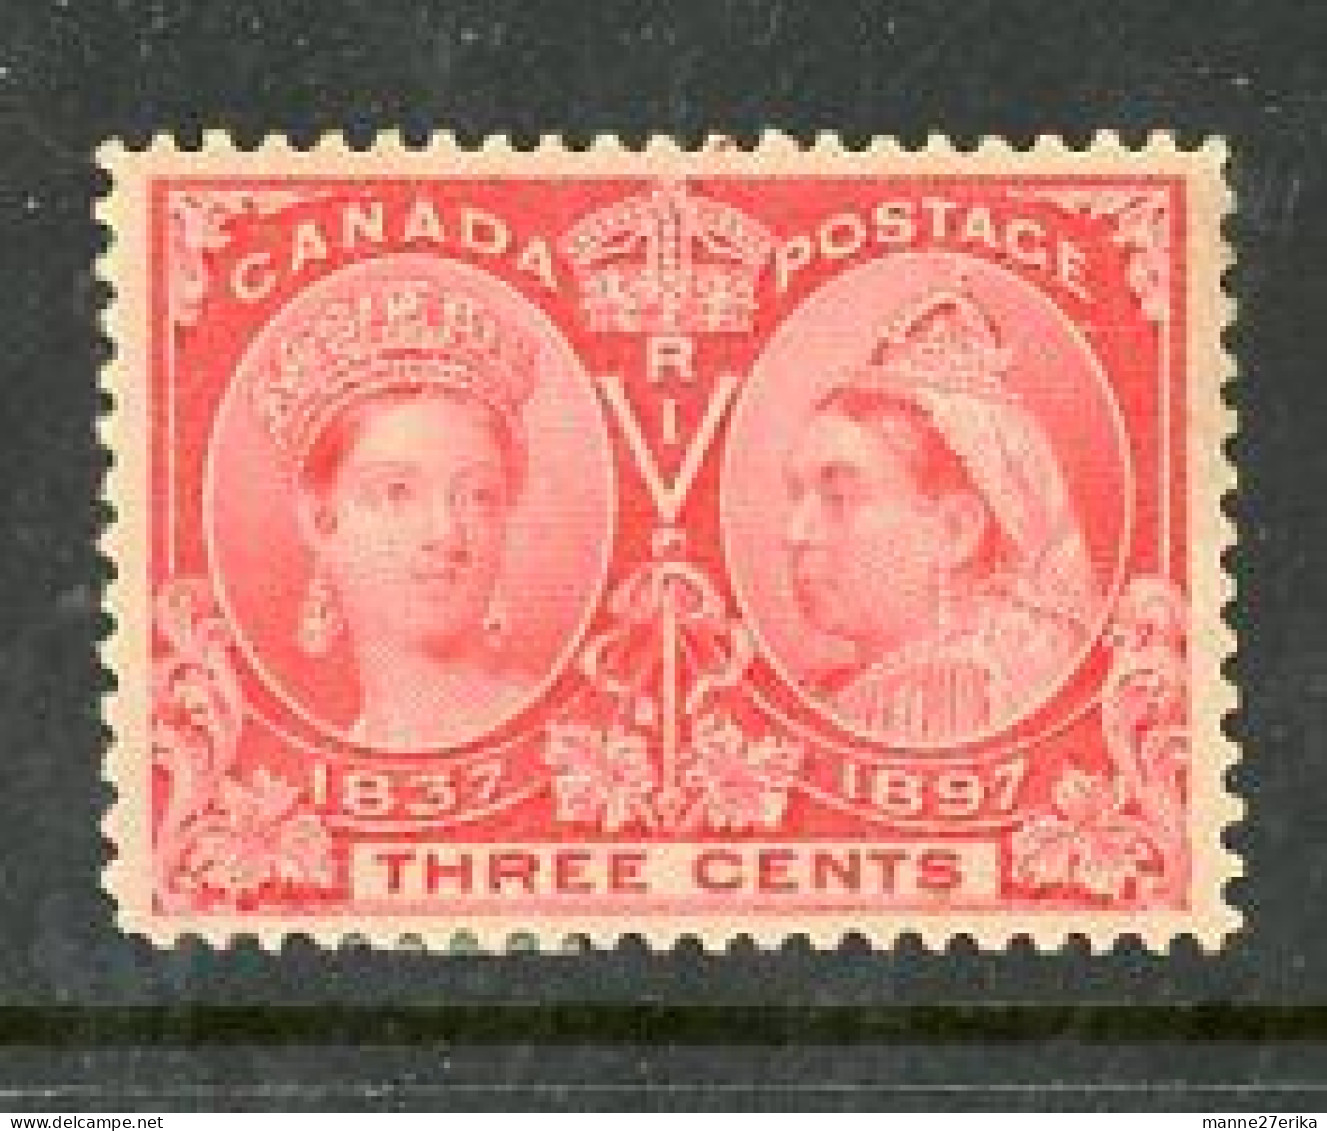 Canada MH 1897 "Diamond Jubilee" - Ongebruikt